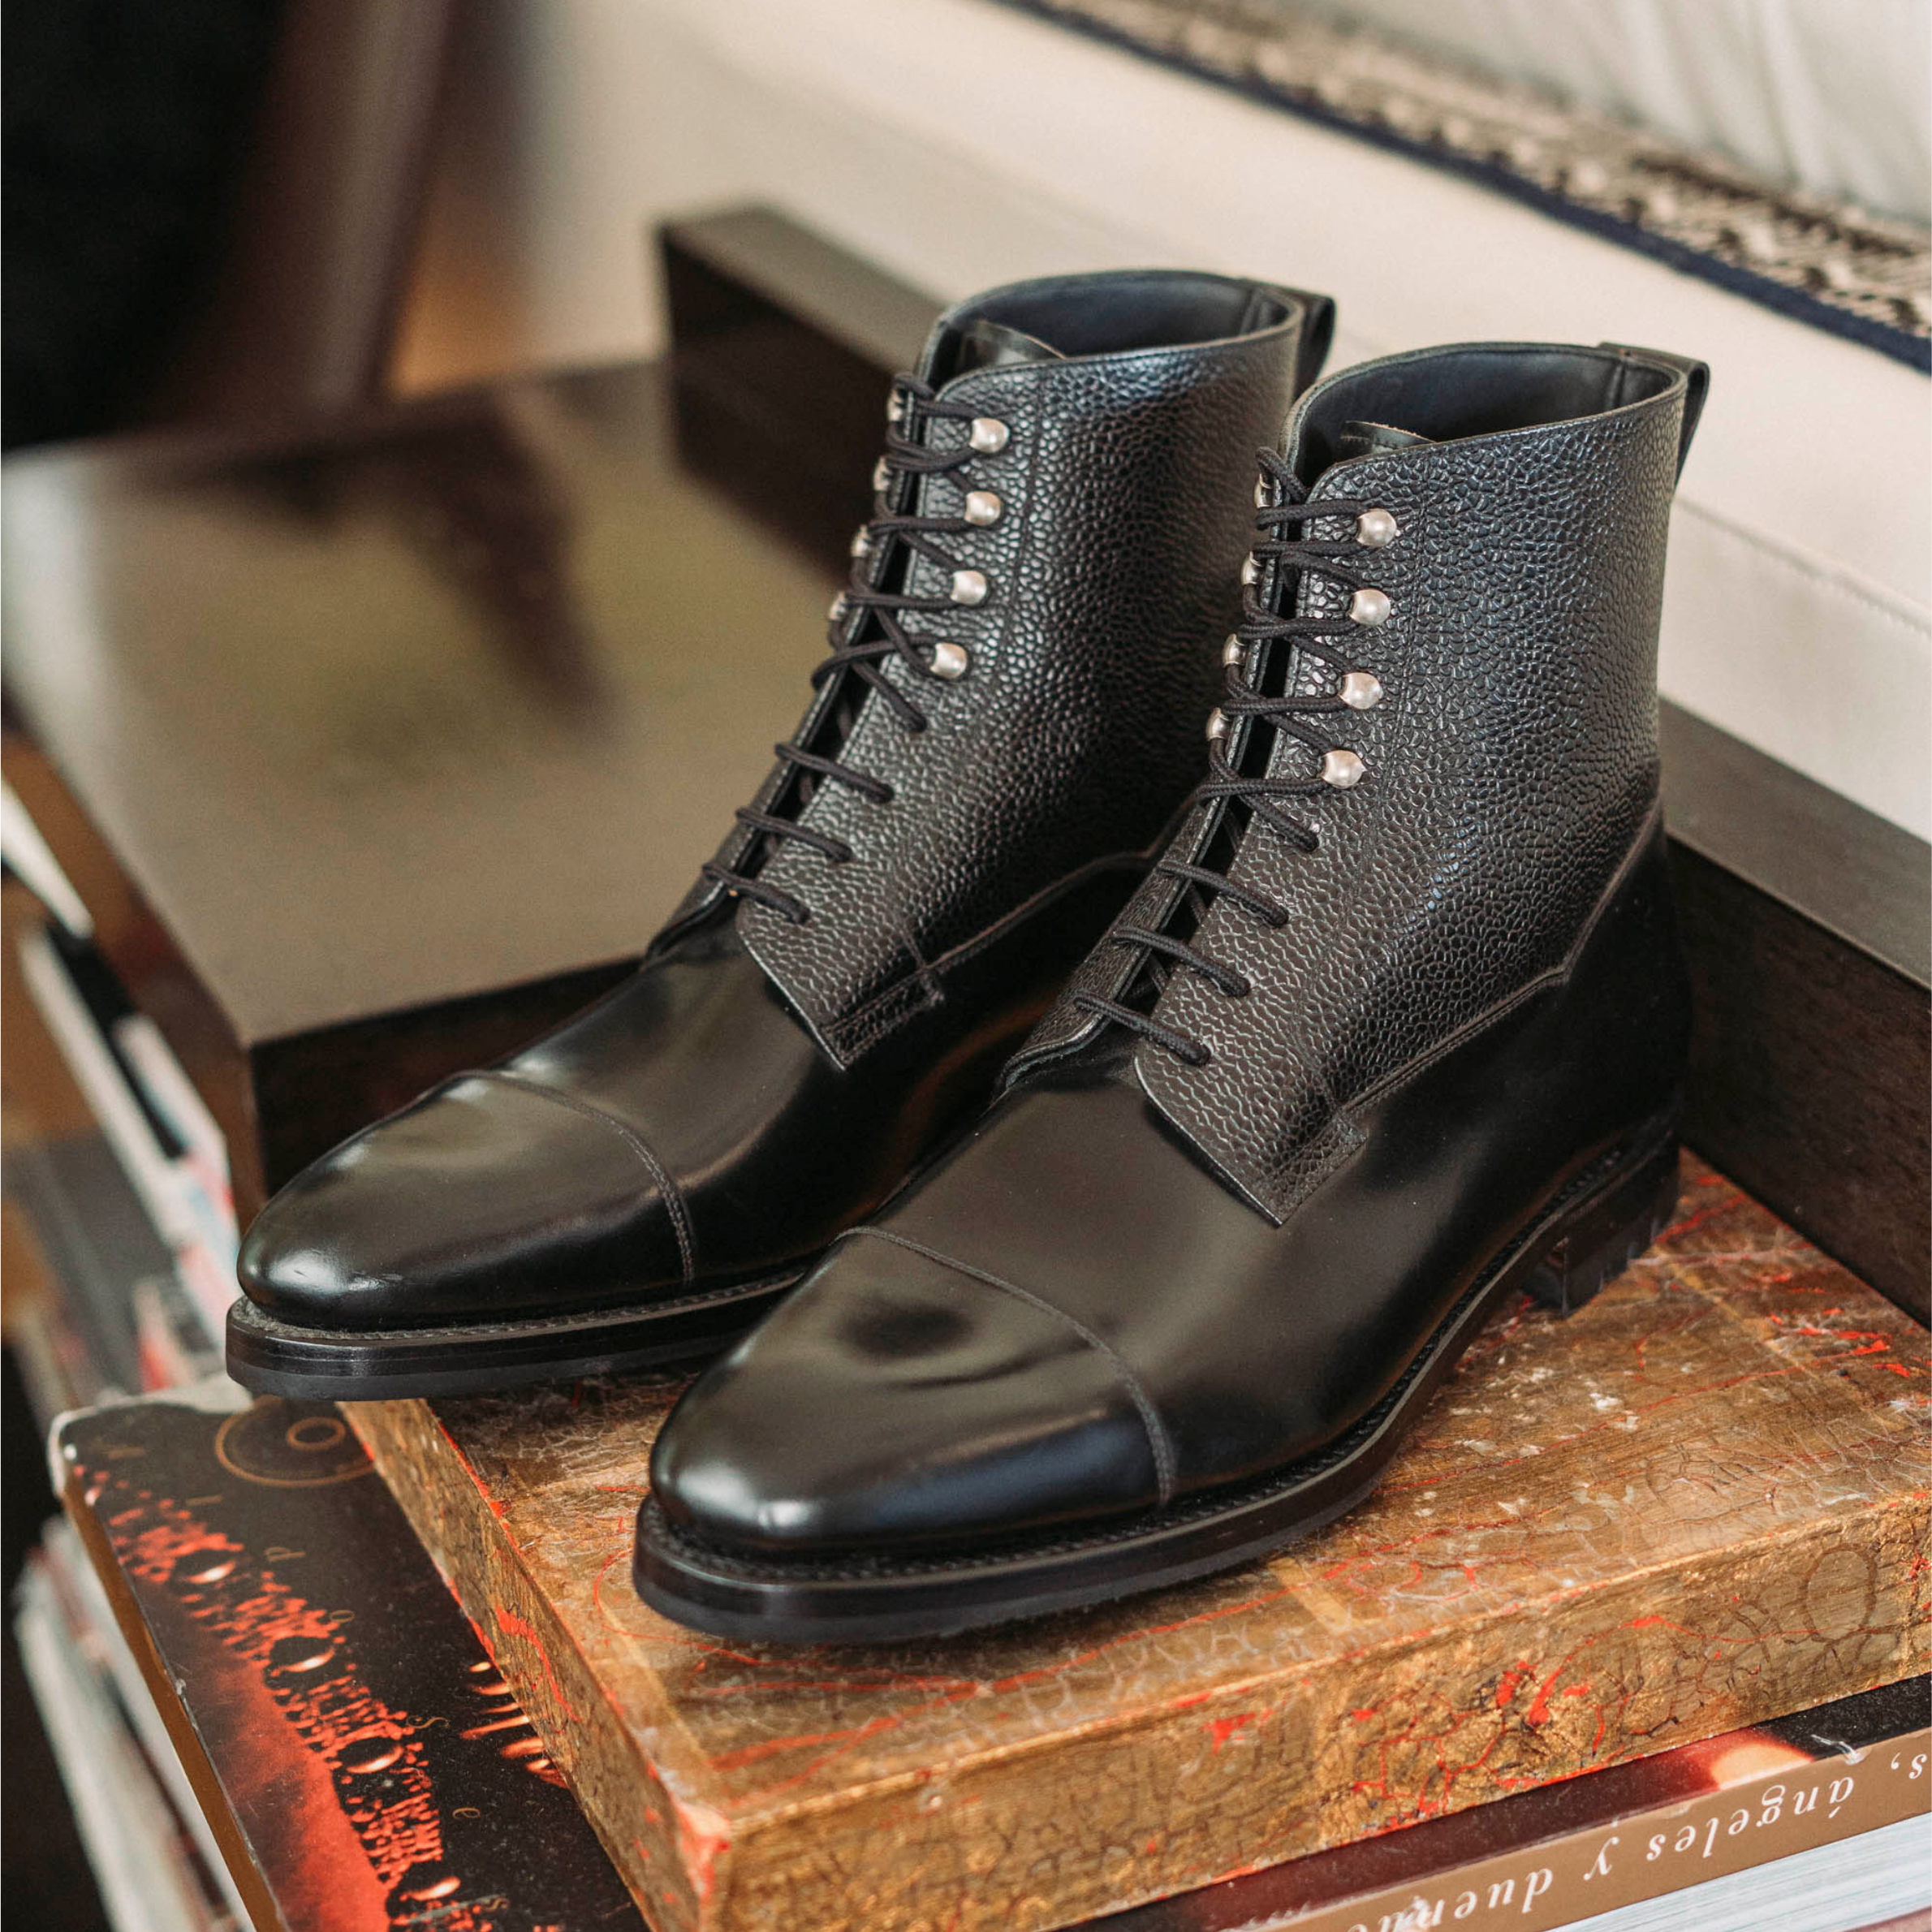 Black Derby boots by Casa Fagliano